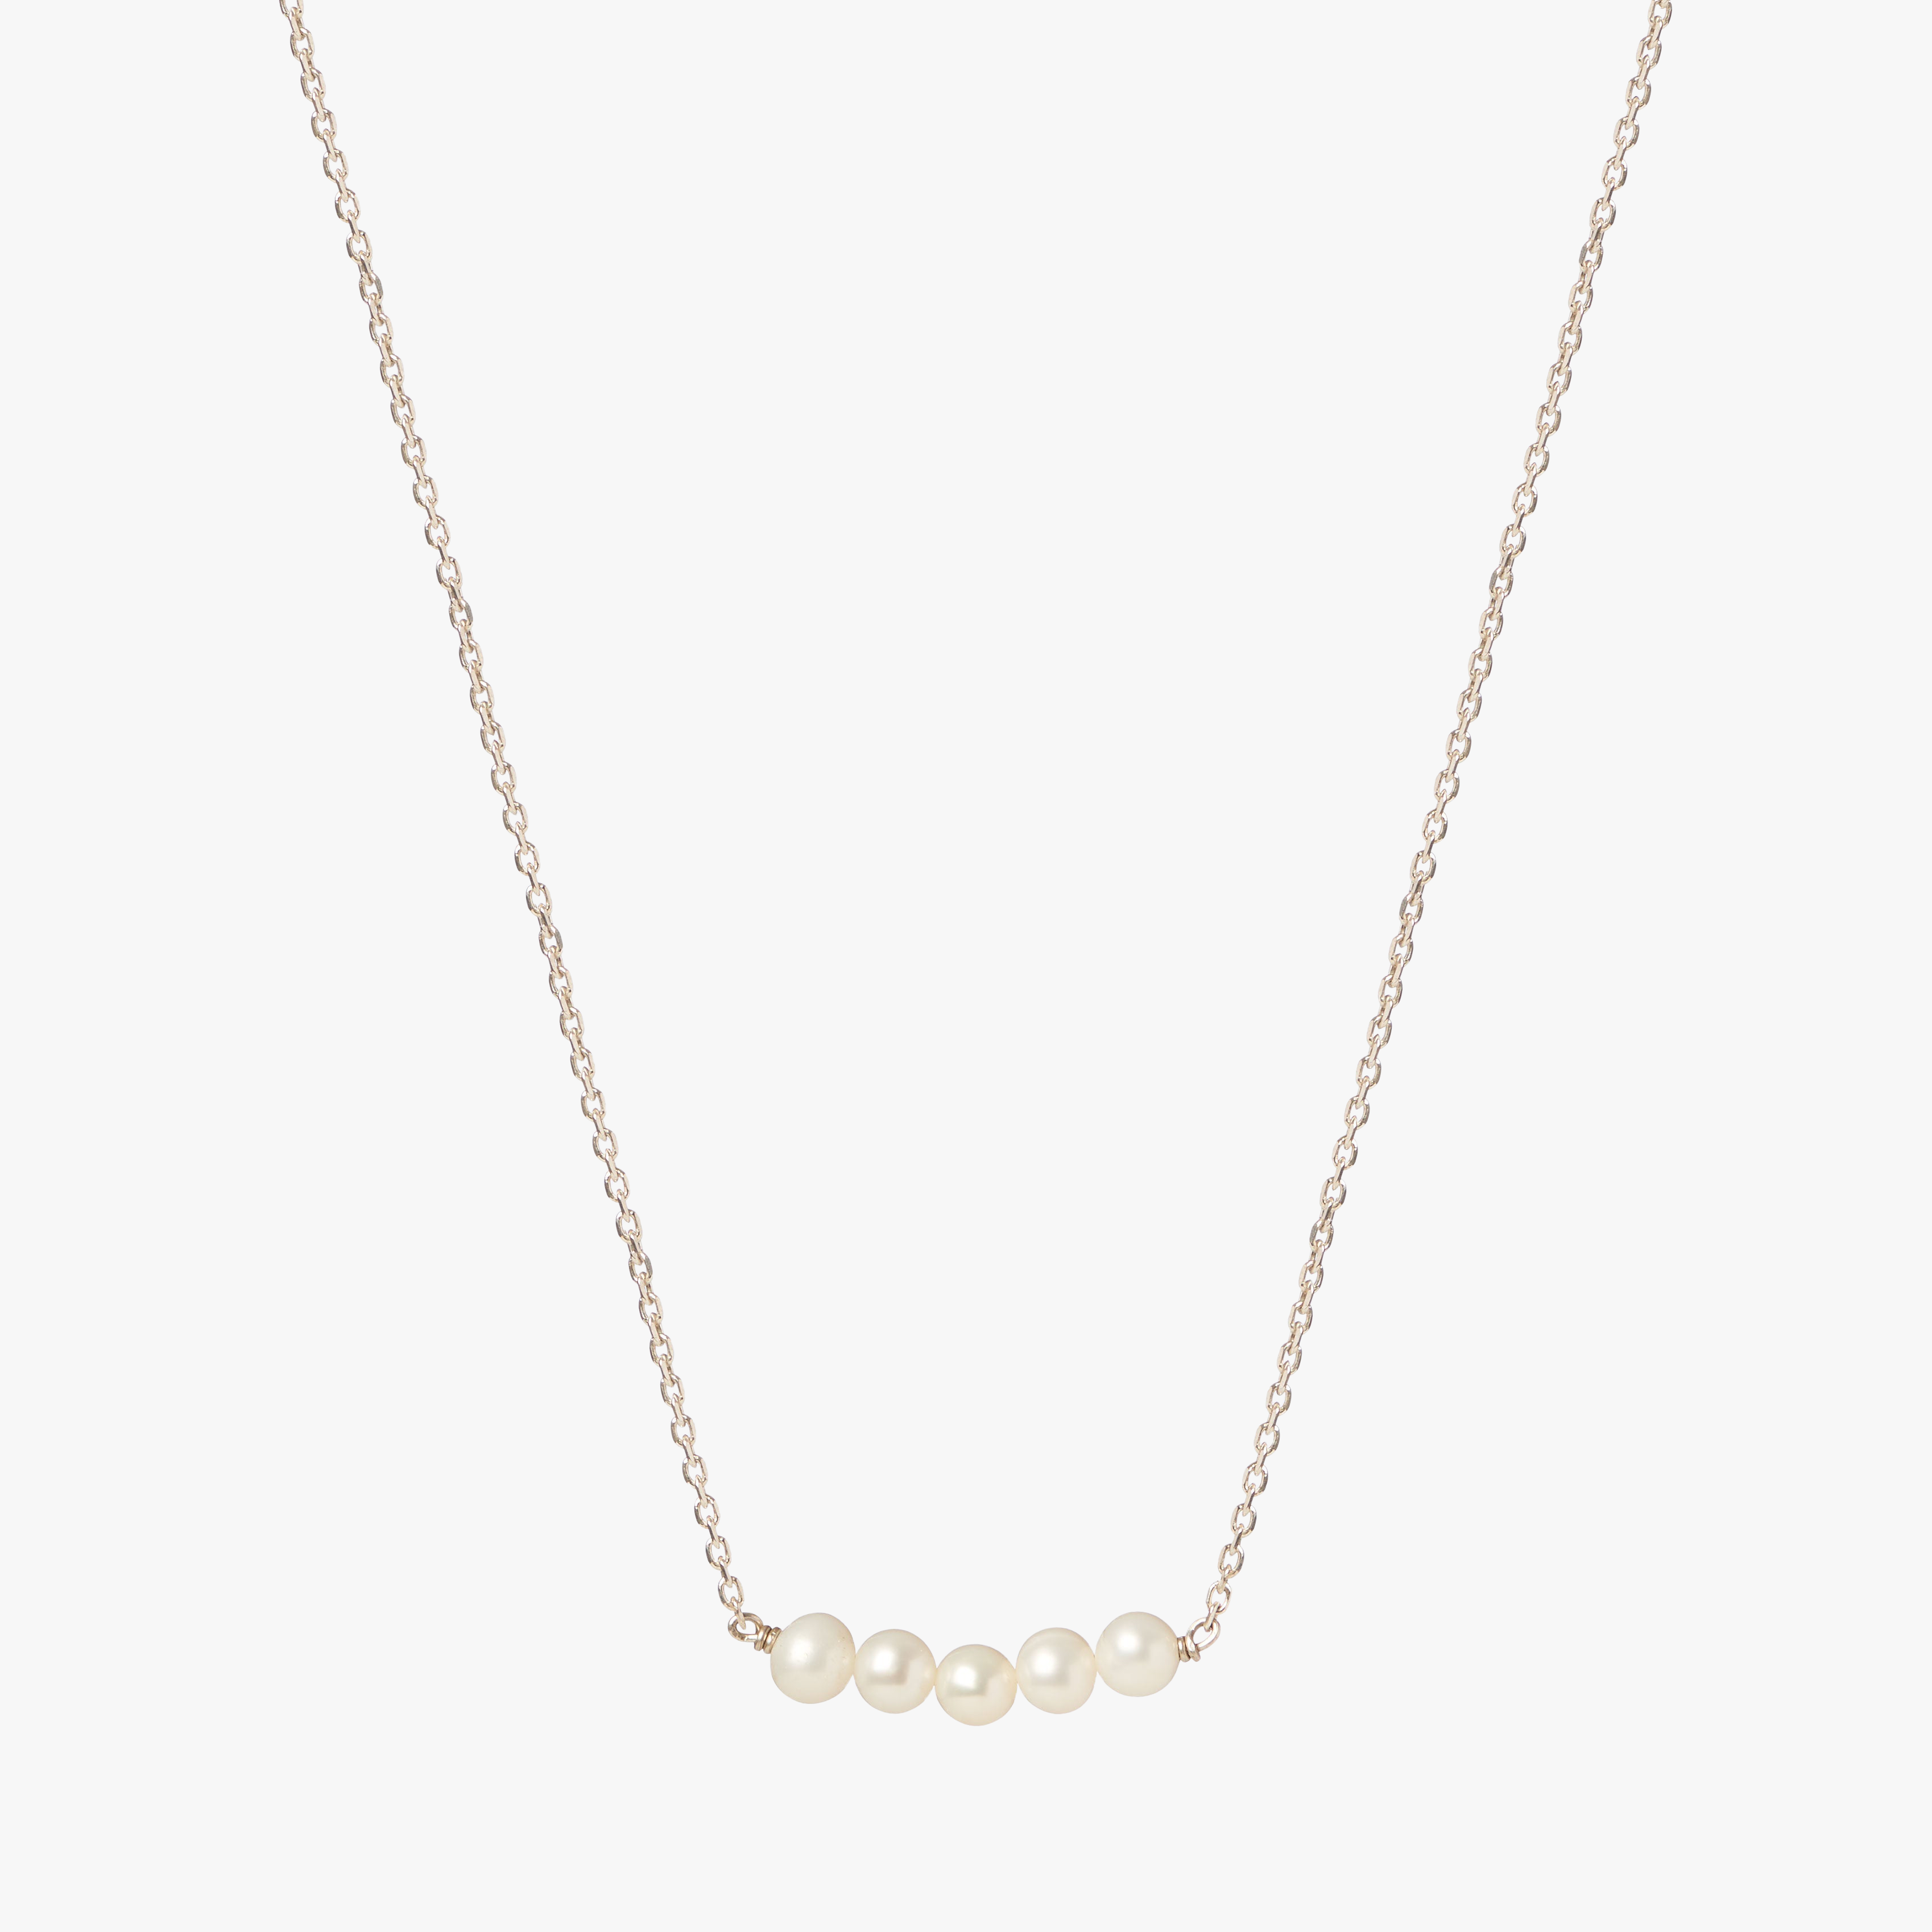 Ile Ronde Silver 5 Pearls - Oceano Pearls